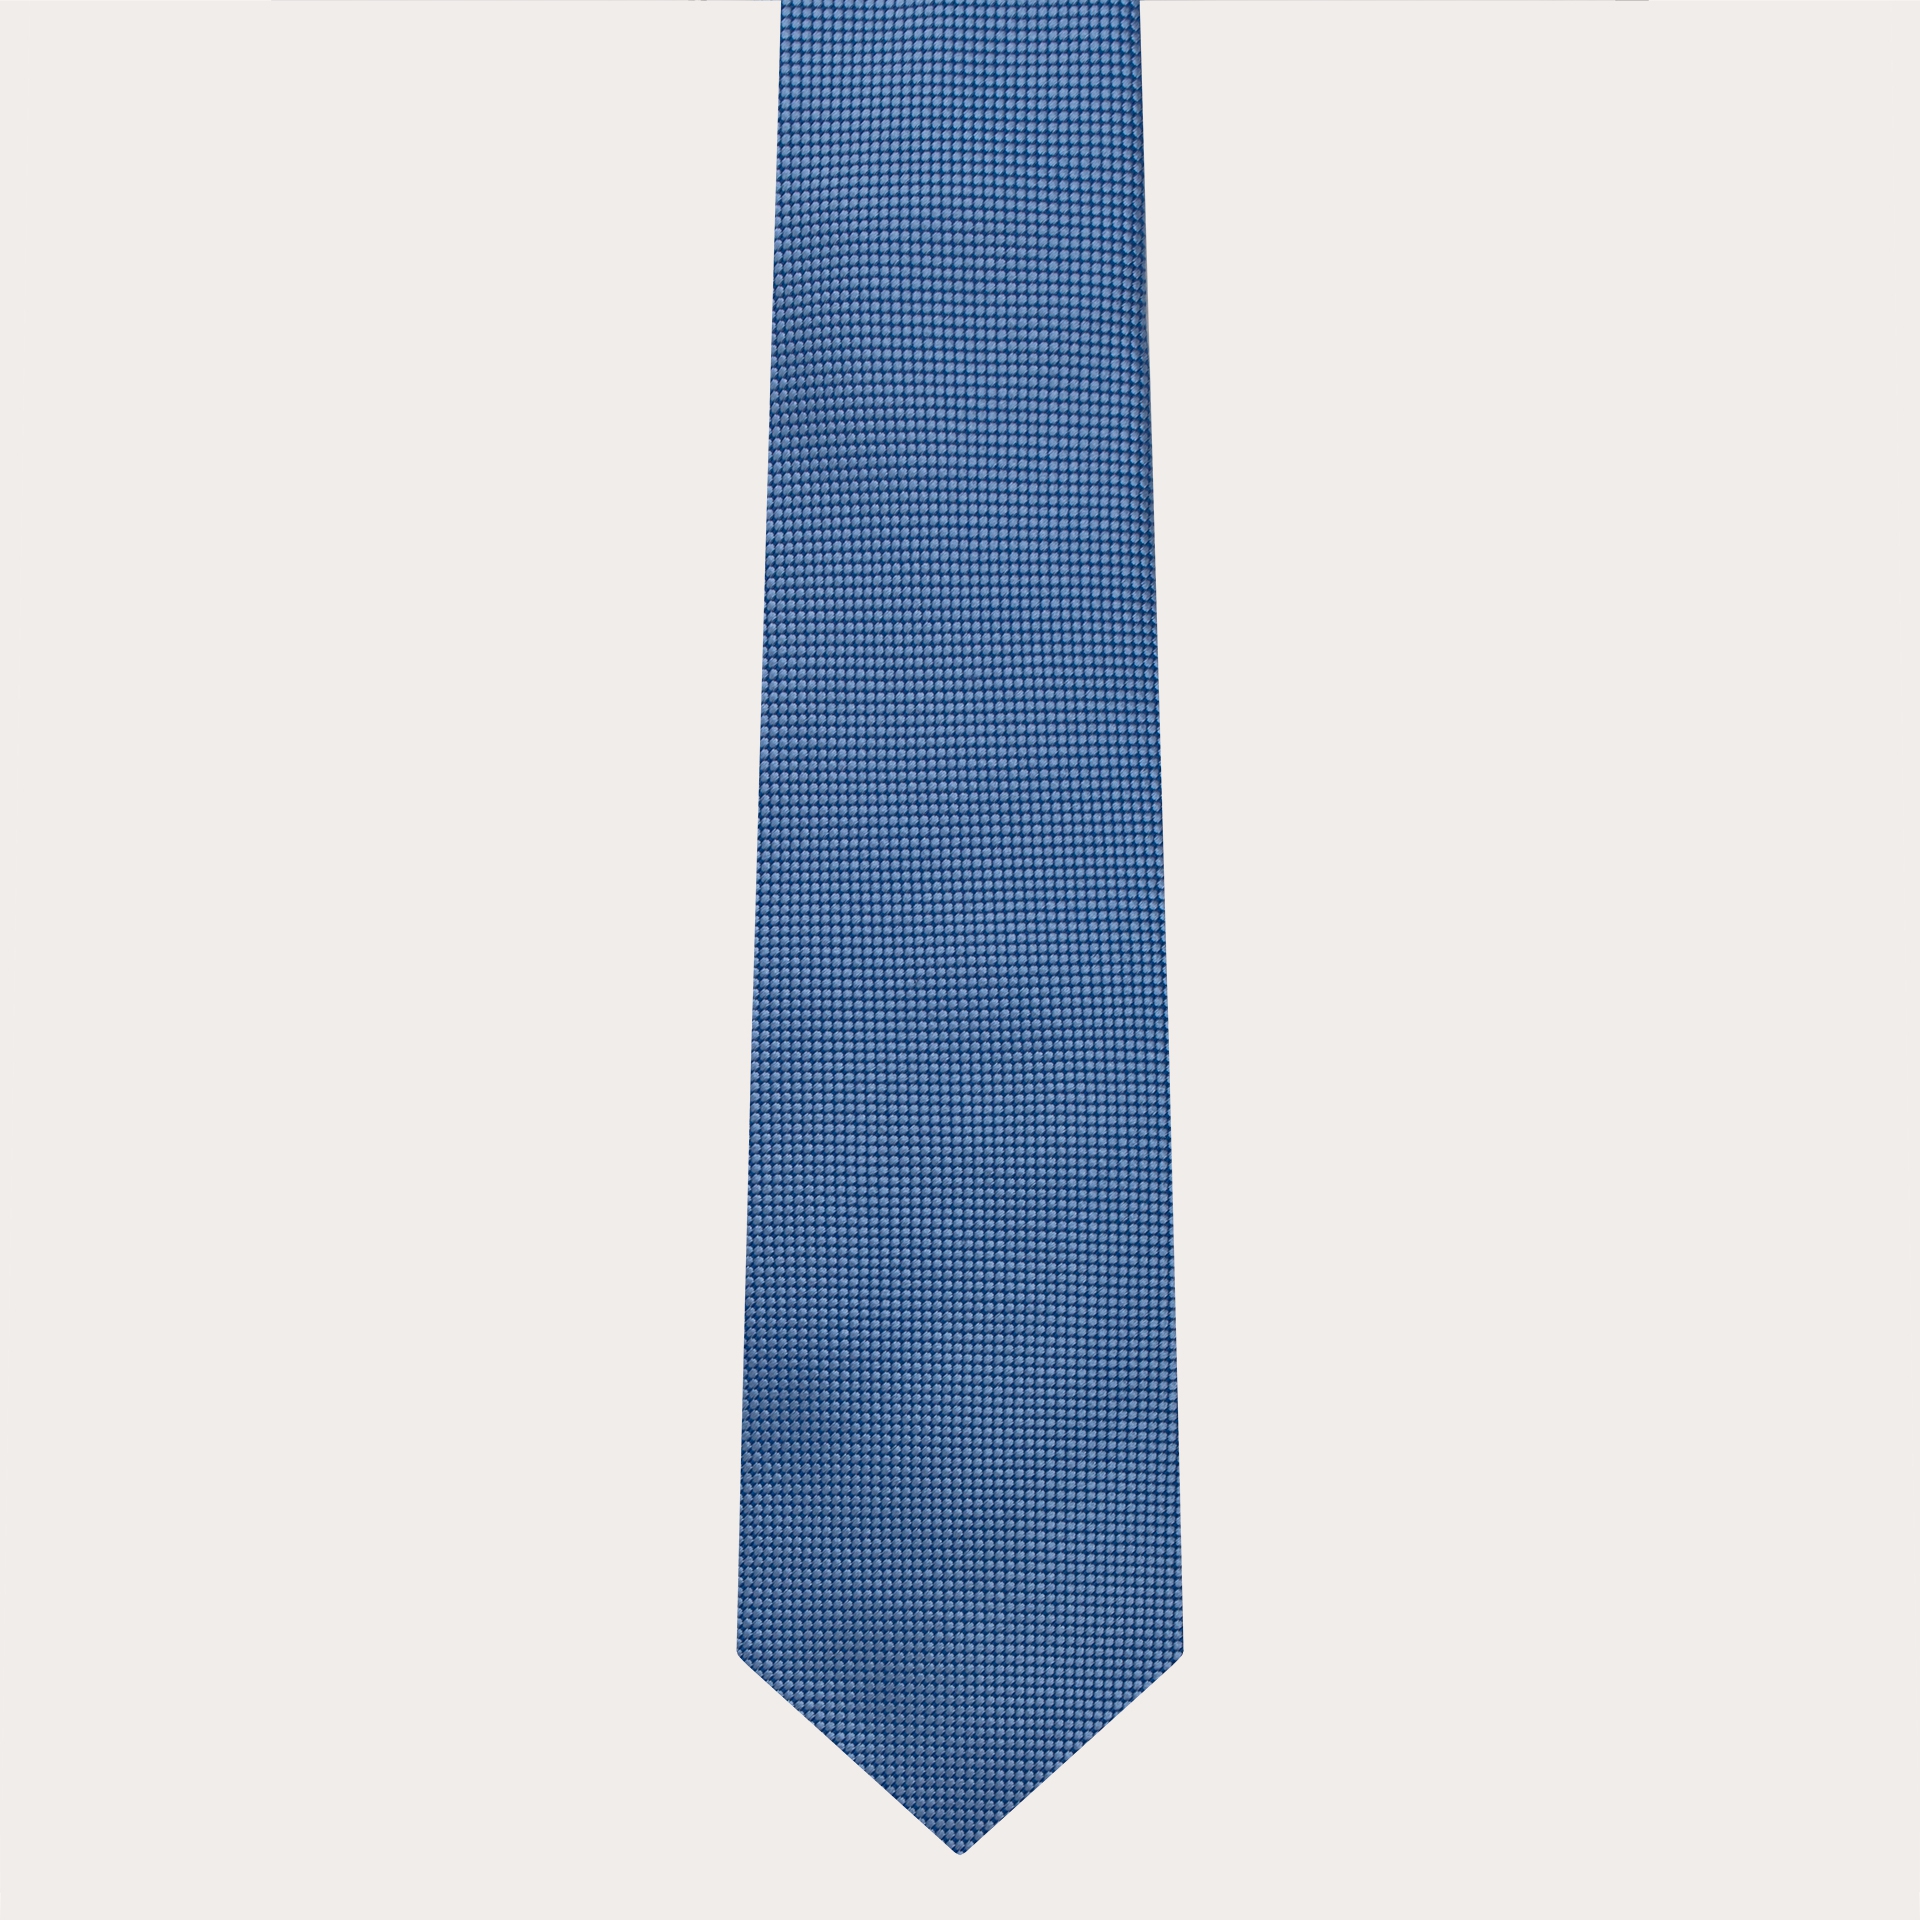 Cravatta cerimonia in seta jacquard, azzurro puntaspillo